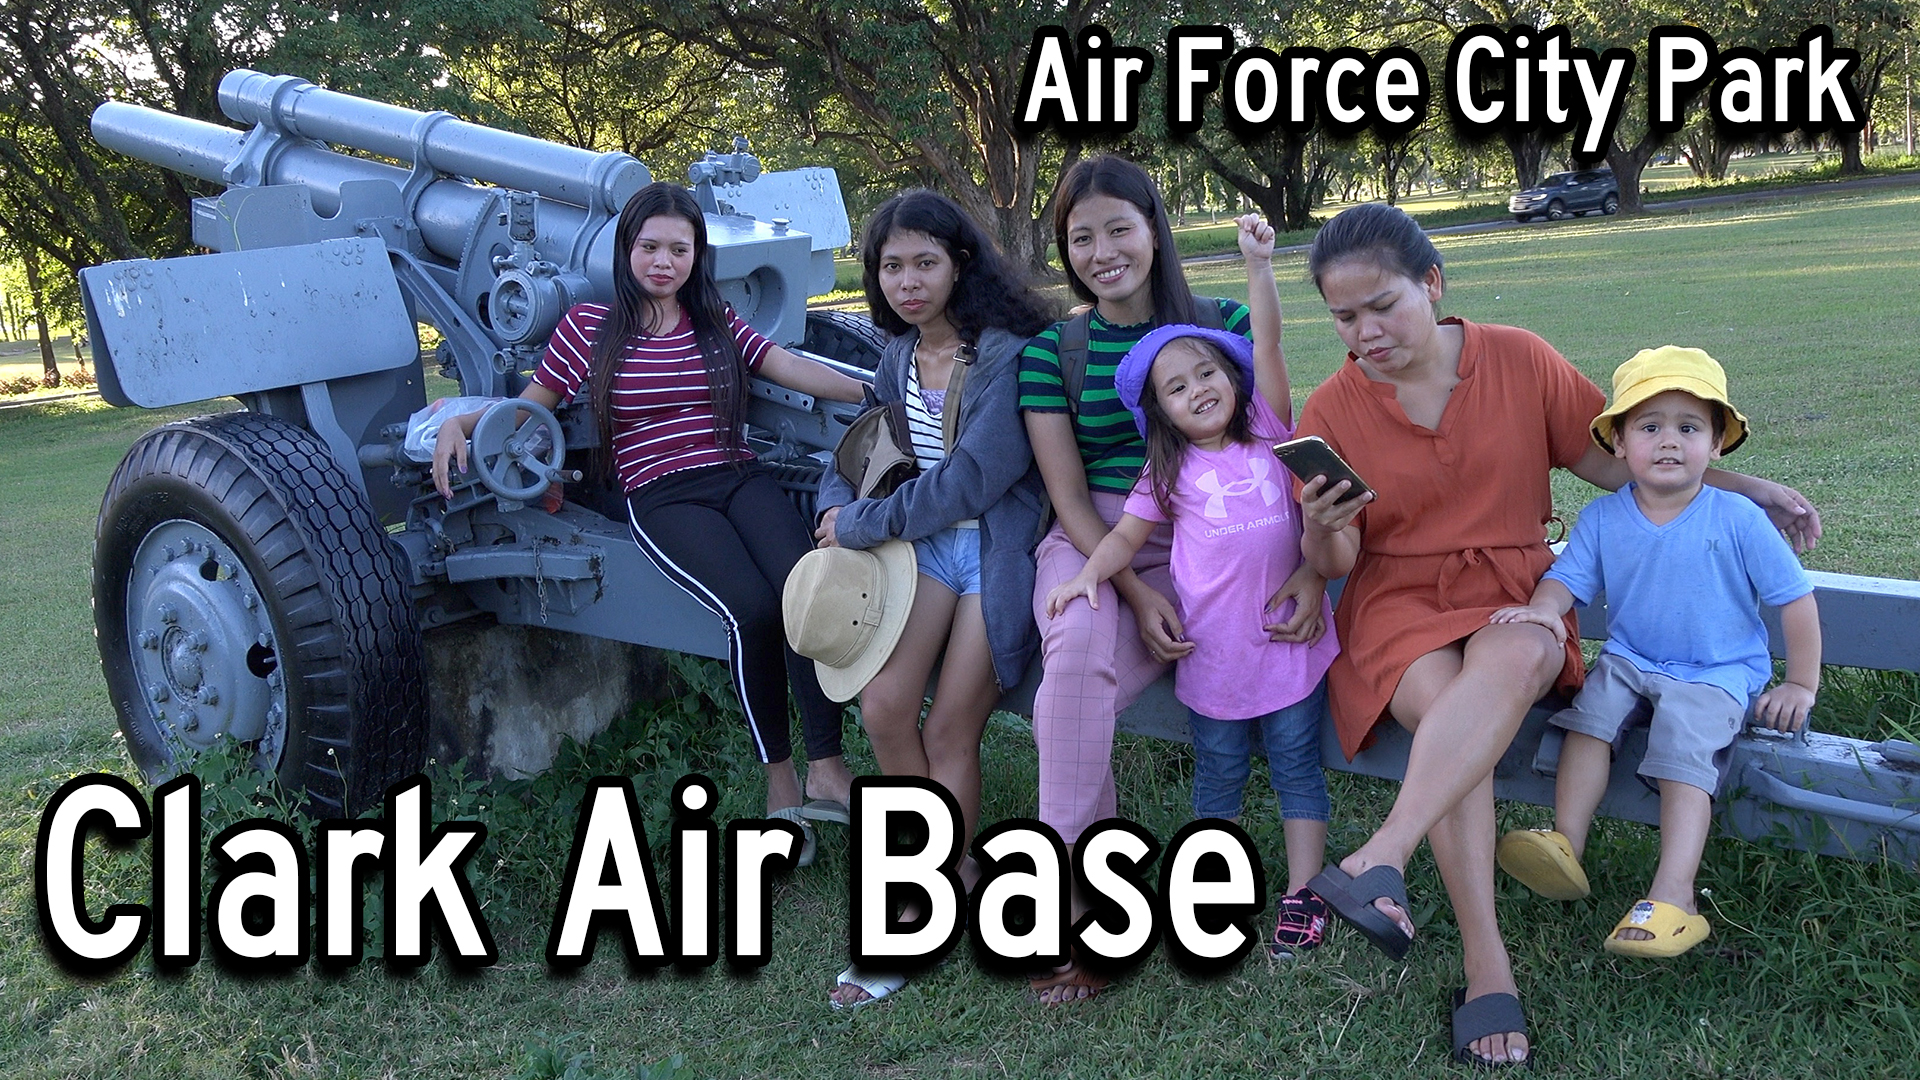 Clark Air Base Air Force City Park Angeles City Philippines 